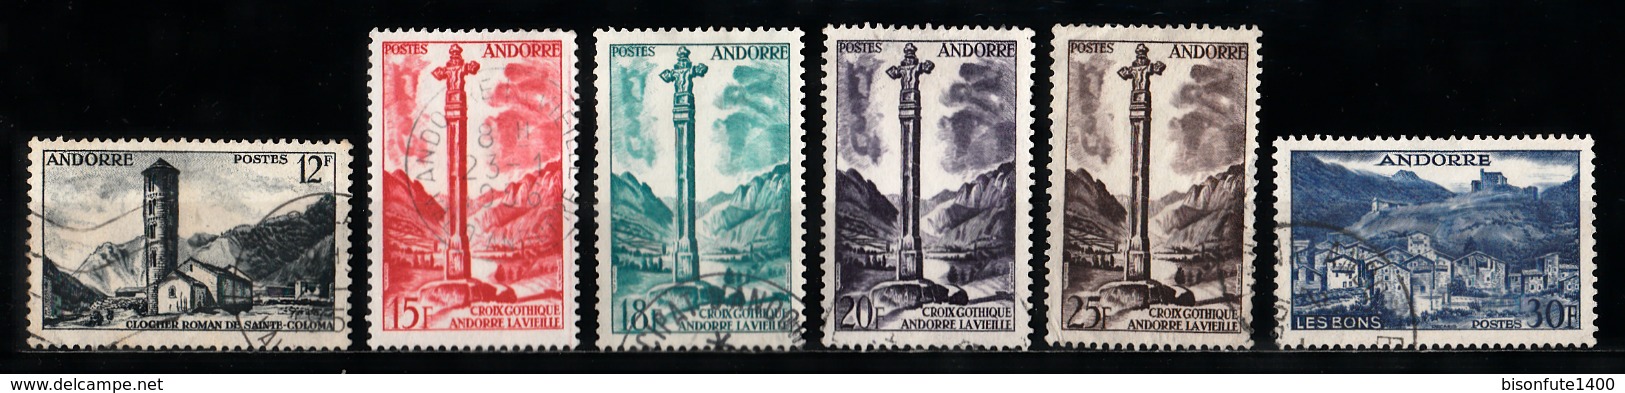 Andorre Français 1955 - 1958 : Timbres Yvert & Tellier N° 138 - 139 - 141 - 143 - 144 - 145 - 146 - 147 - 148 - 149 -... - Usati